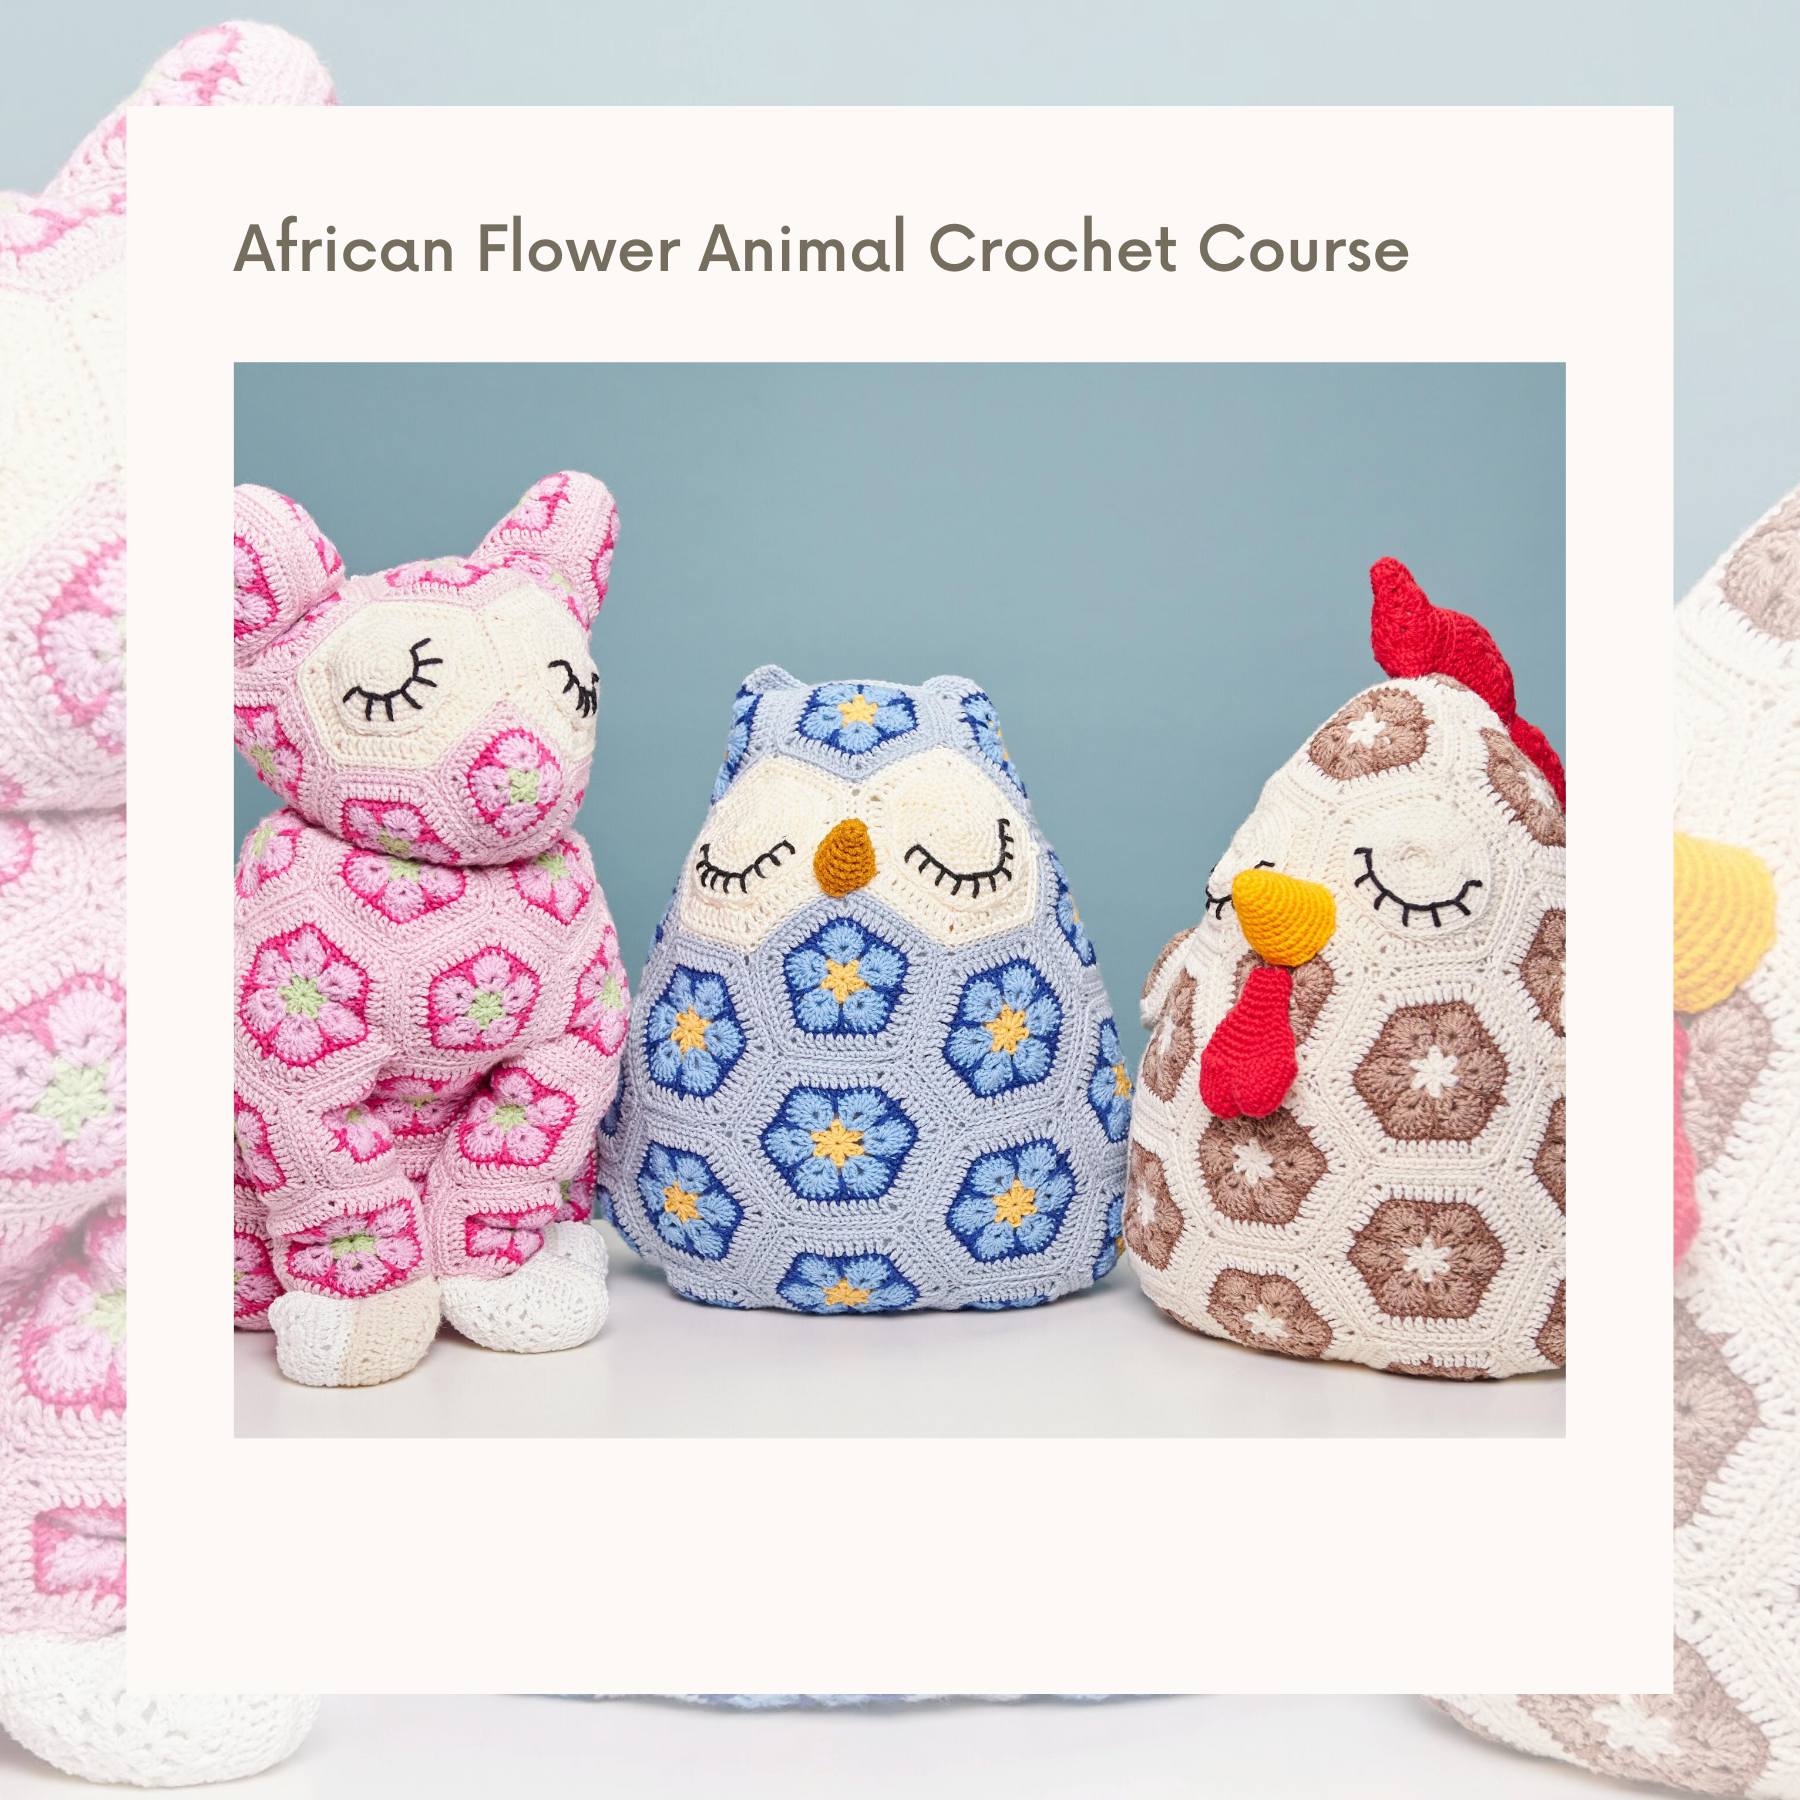 African Flower Animal Crochet Course